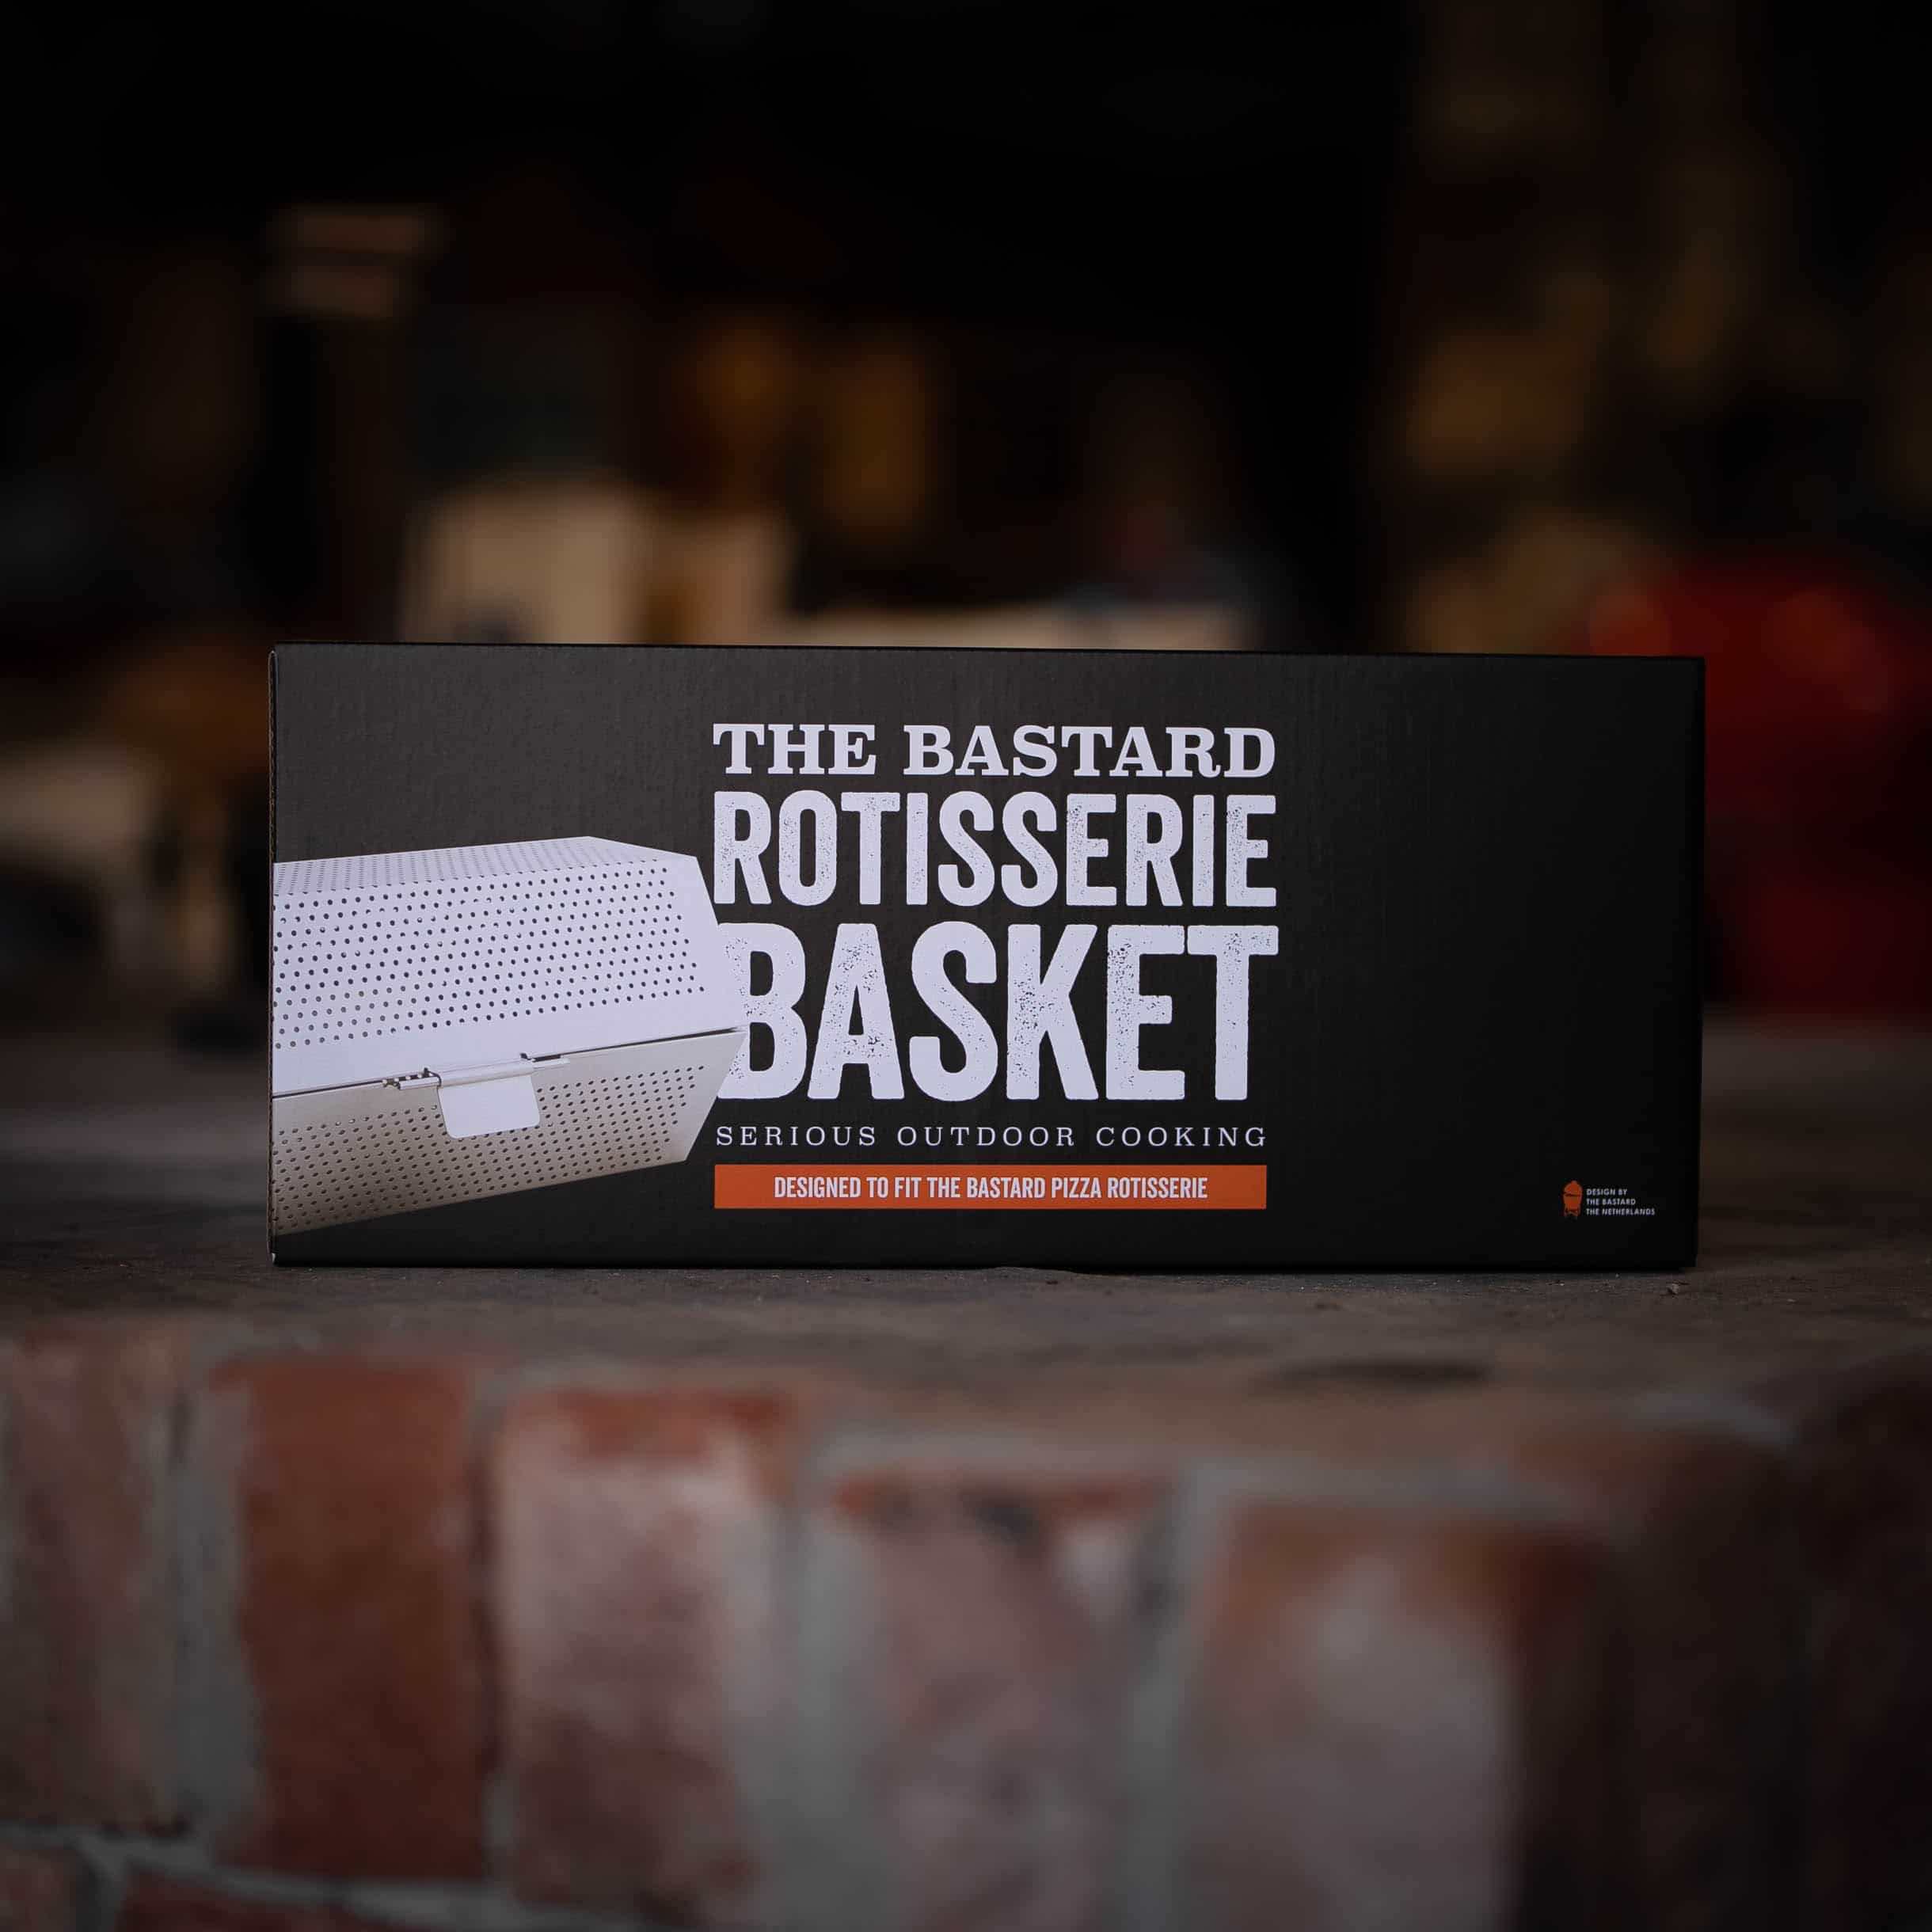 The Bastard Rotisserie Basket